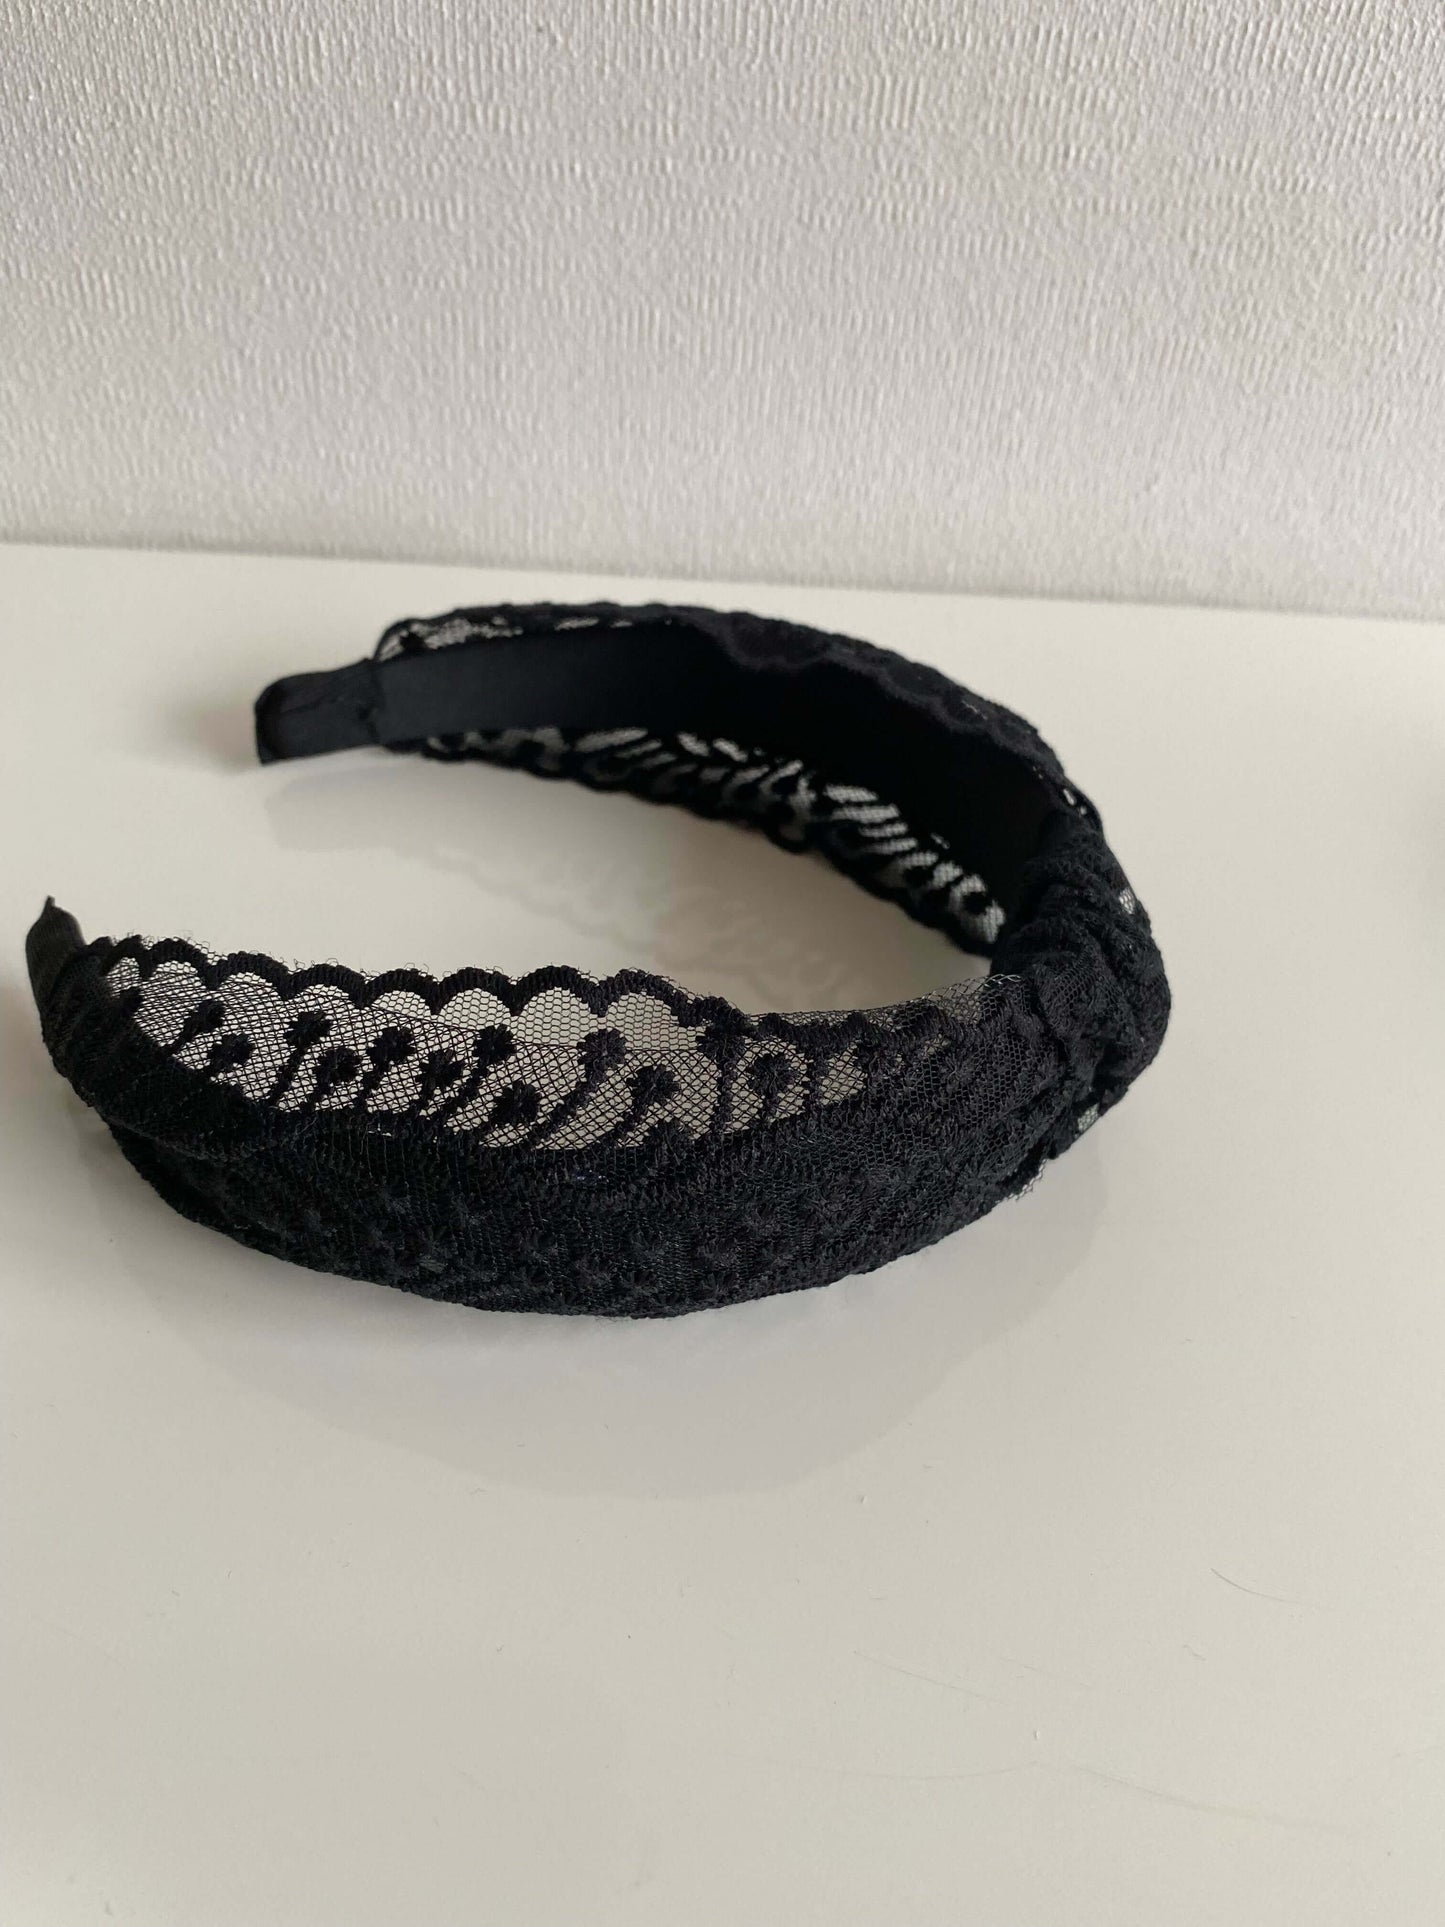 Headband accessories, accessory, apparel & accessories, fabric headband, hair accessories, head band, headband, knotted headband, lace headband